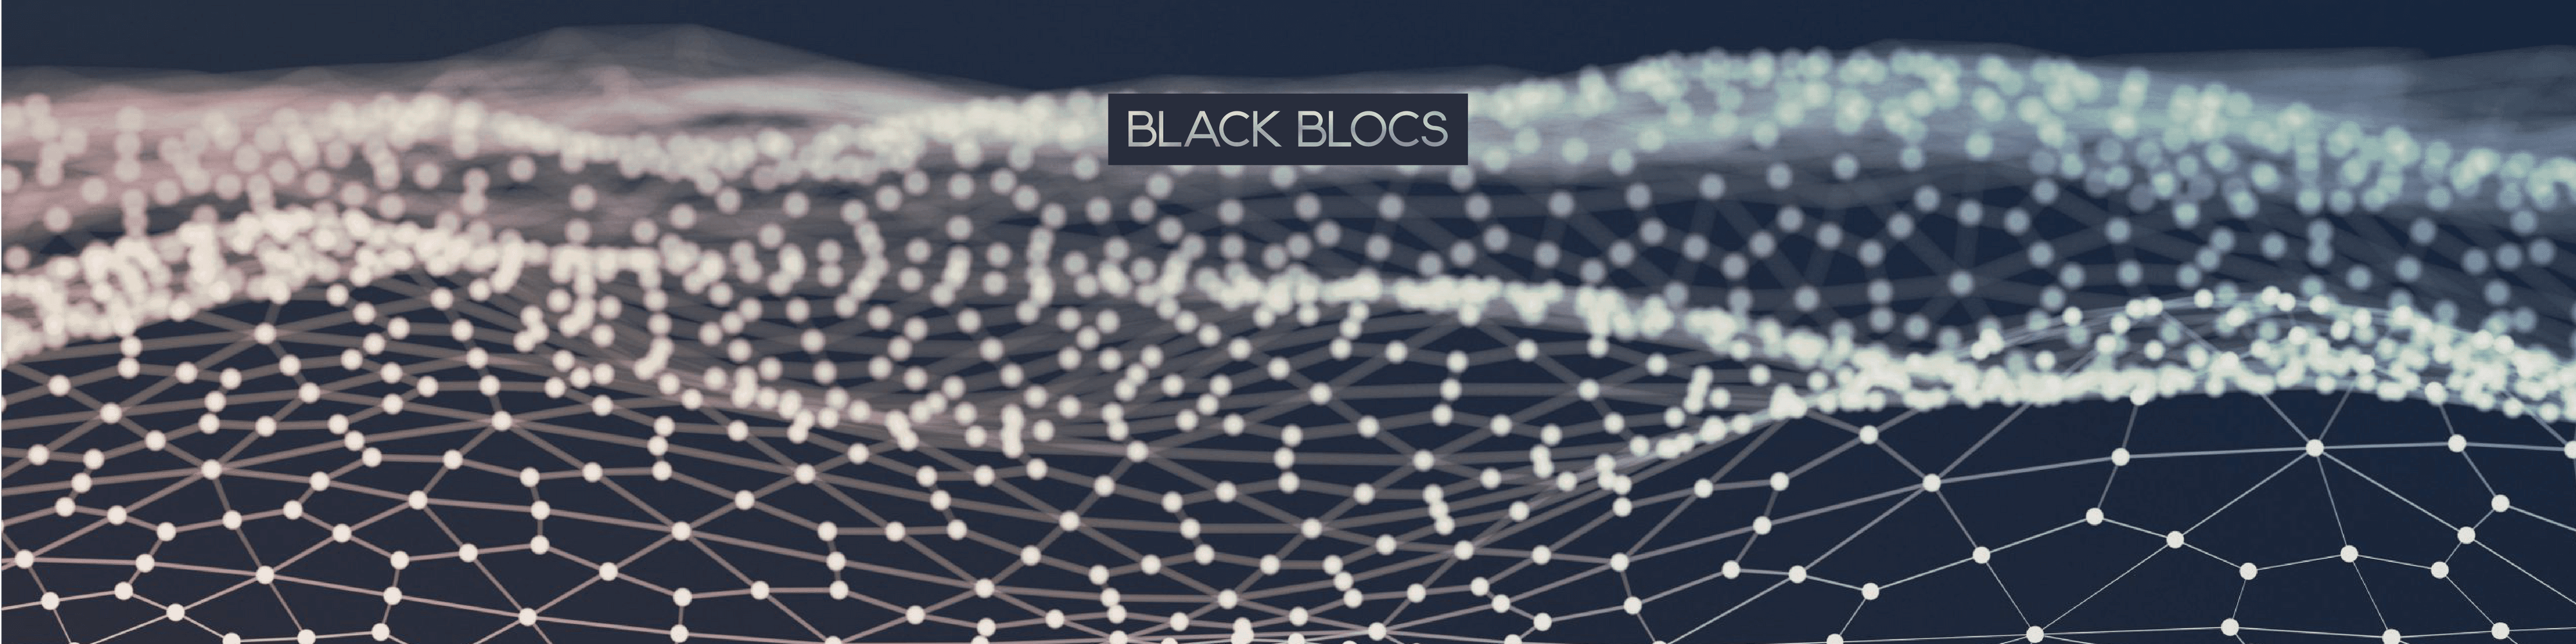 Black-Blocs-1 バナー